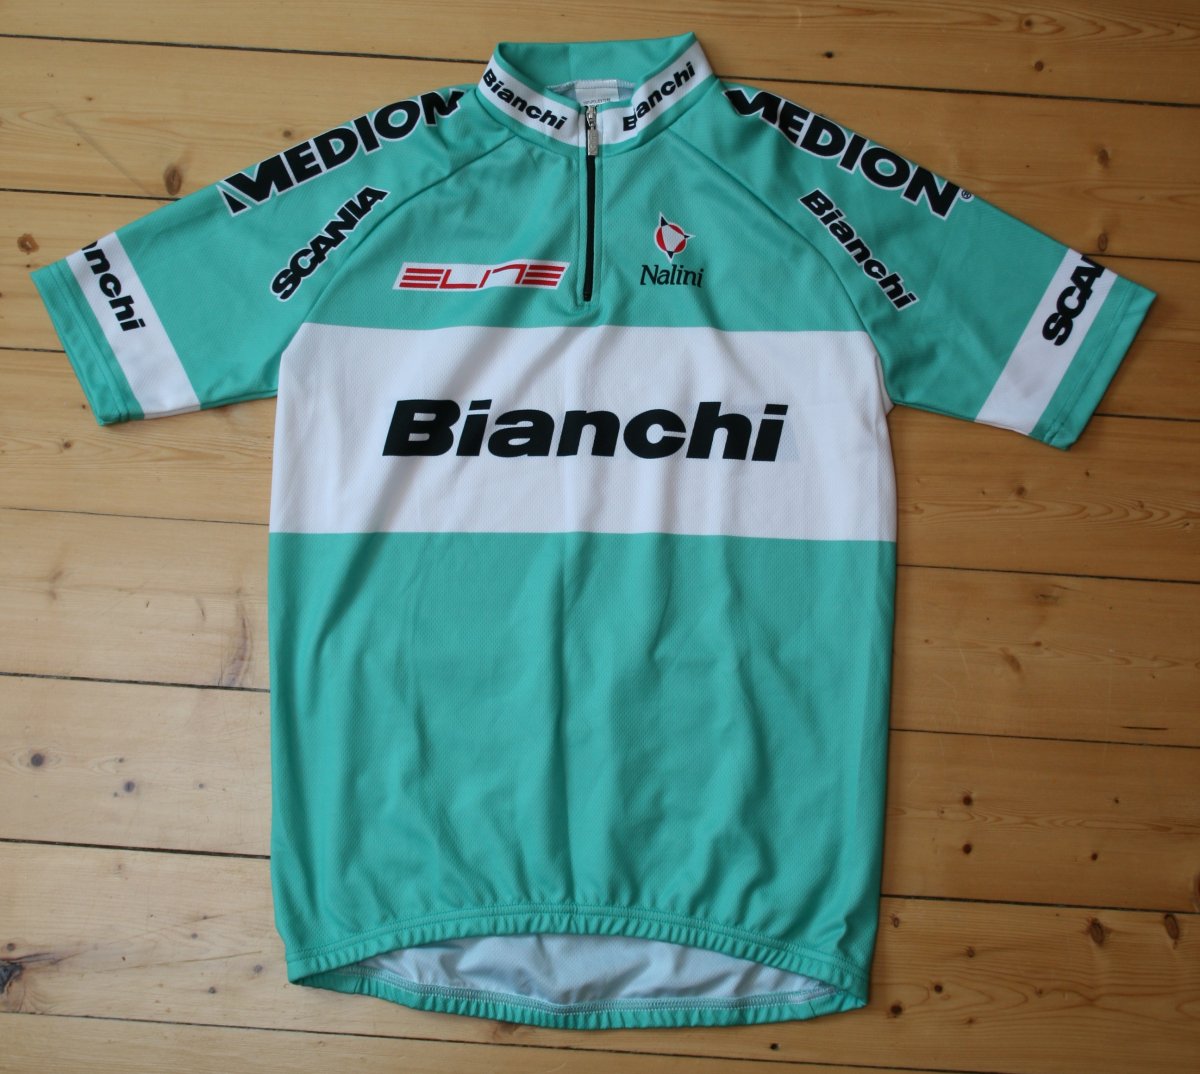 2003 Bianchi.JPG